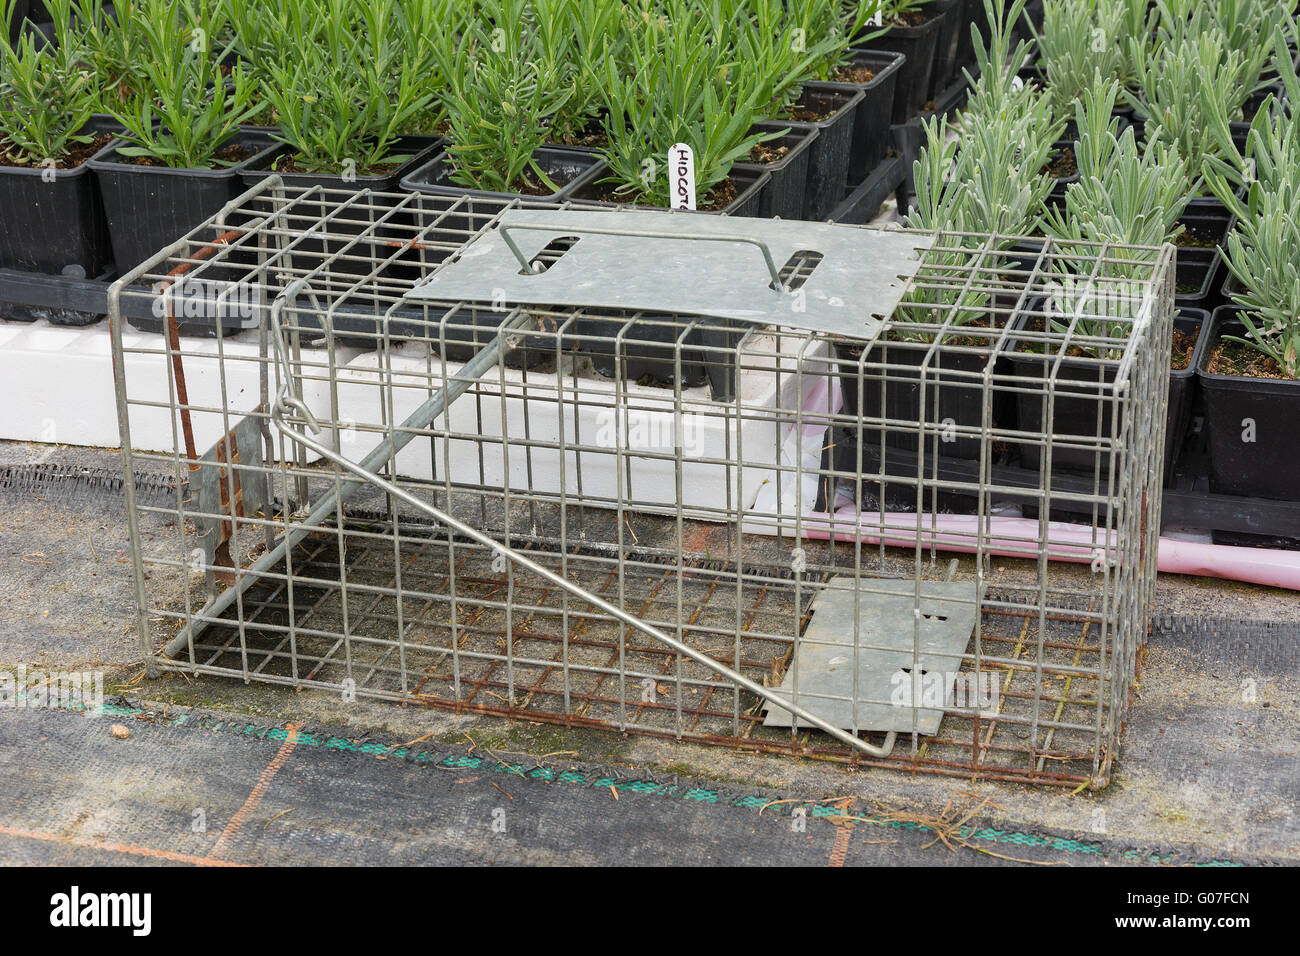 https://c8.alamy.com/comp/G07FCN/steel-humane-rat-trap-set-up-in-a-garden-nursery-G07FCN.jpg